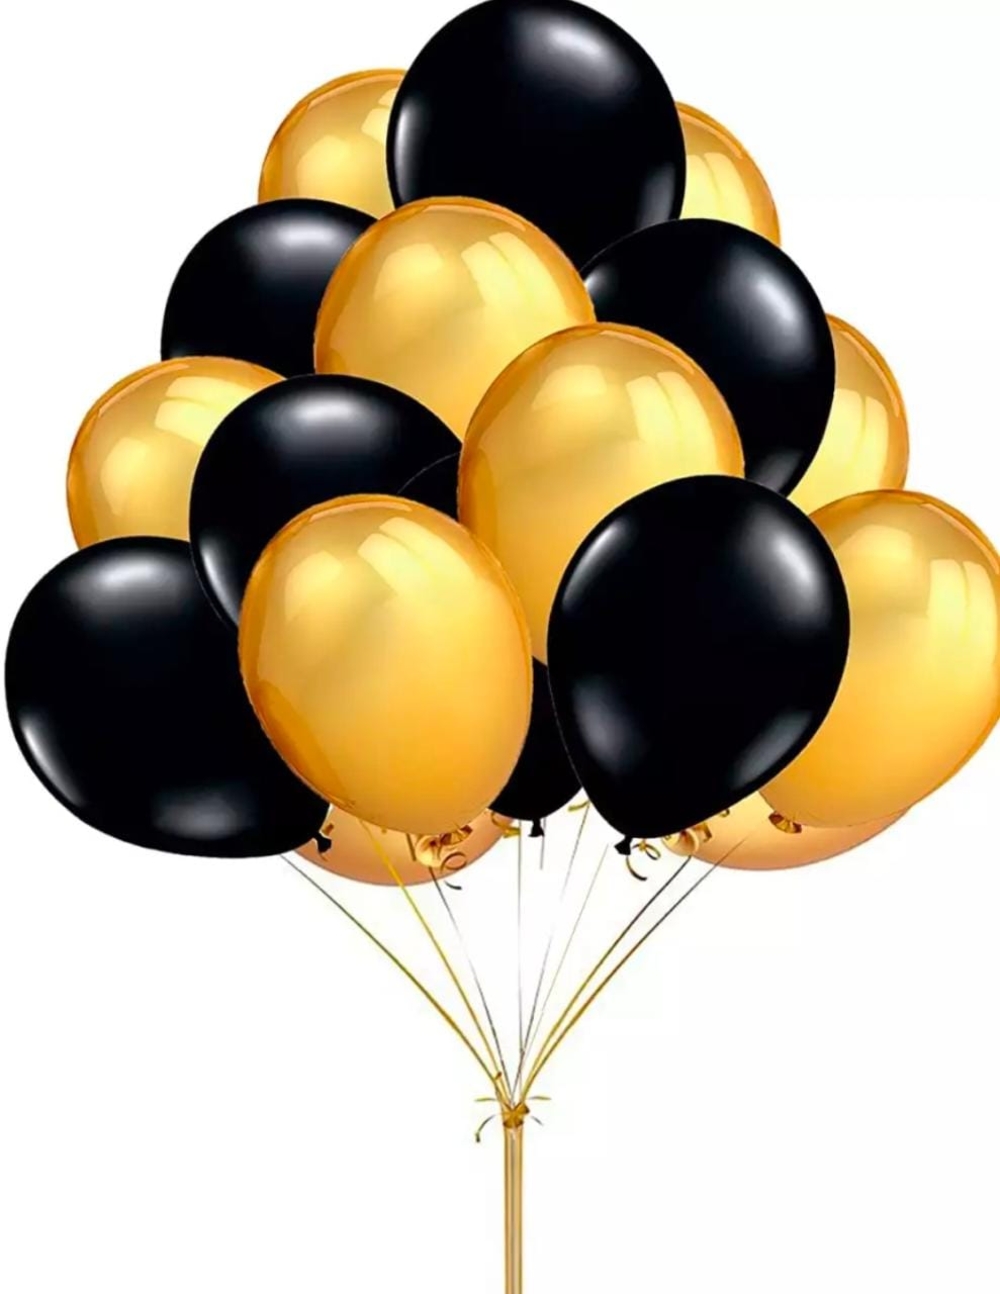 Black and Golden yellow Metallic Balloons